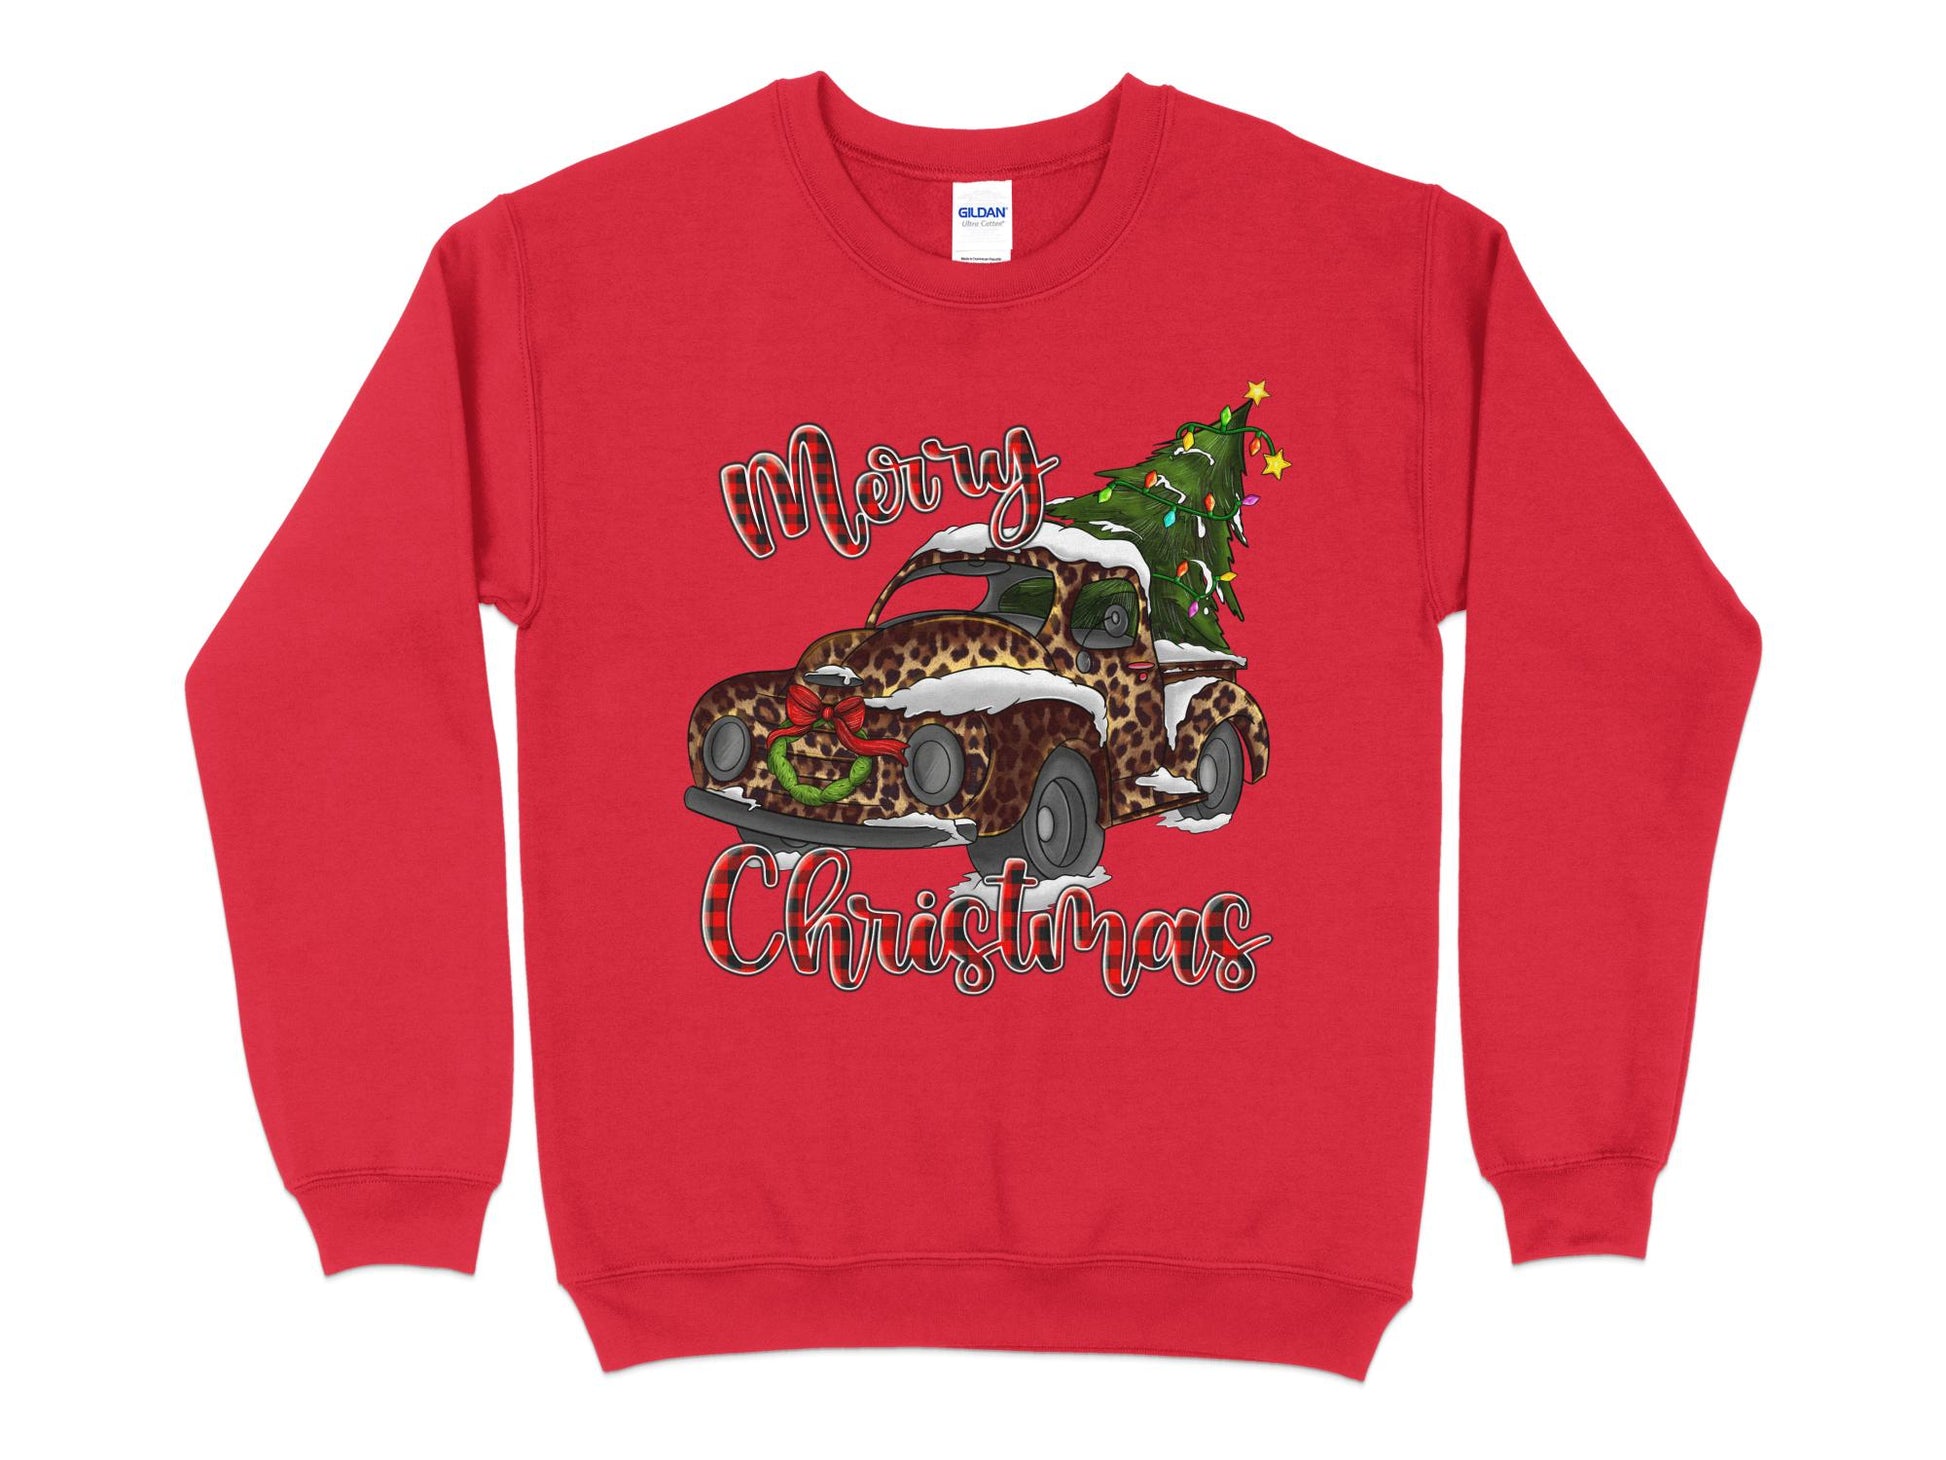 Merry Christmas Leopard Print Truck Sweatshirt, Christmas Sweater for Women, Christmas Gift for Women, Holiday Sweater, Xmas Shirt - Mardonyx Sweatshirt S / Red